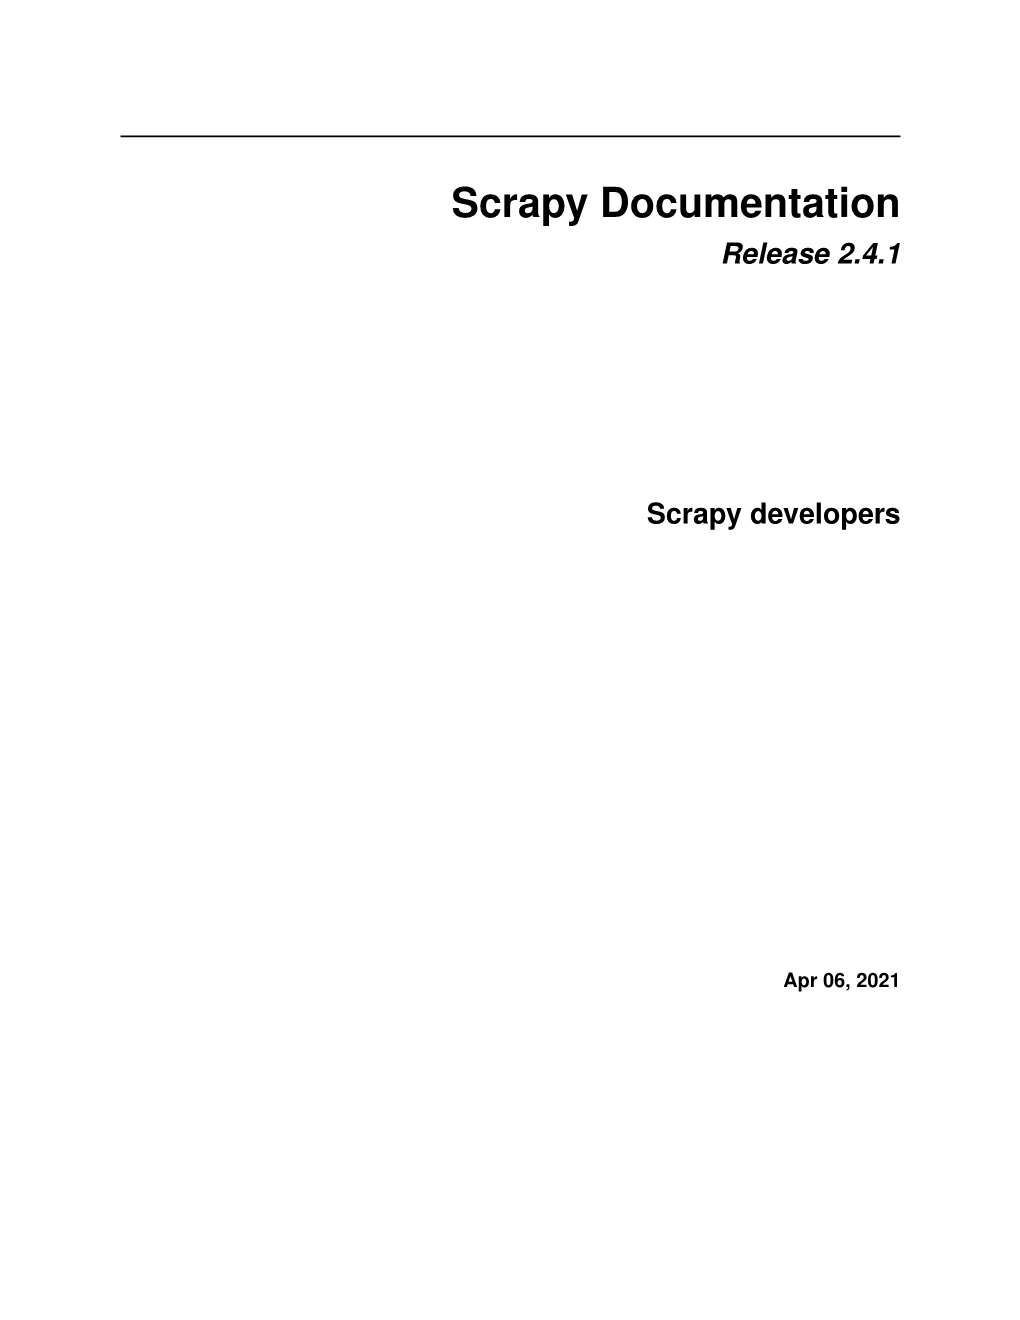 Scrapy Documentation Release 2.4.1